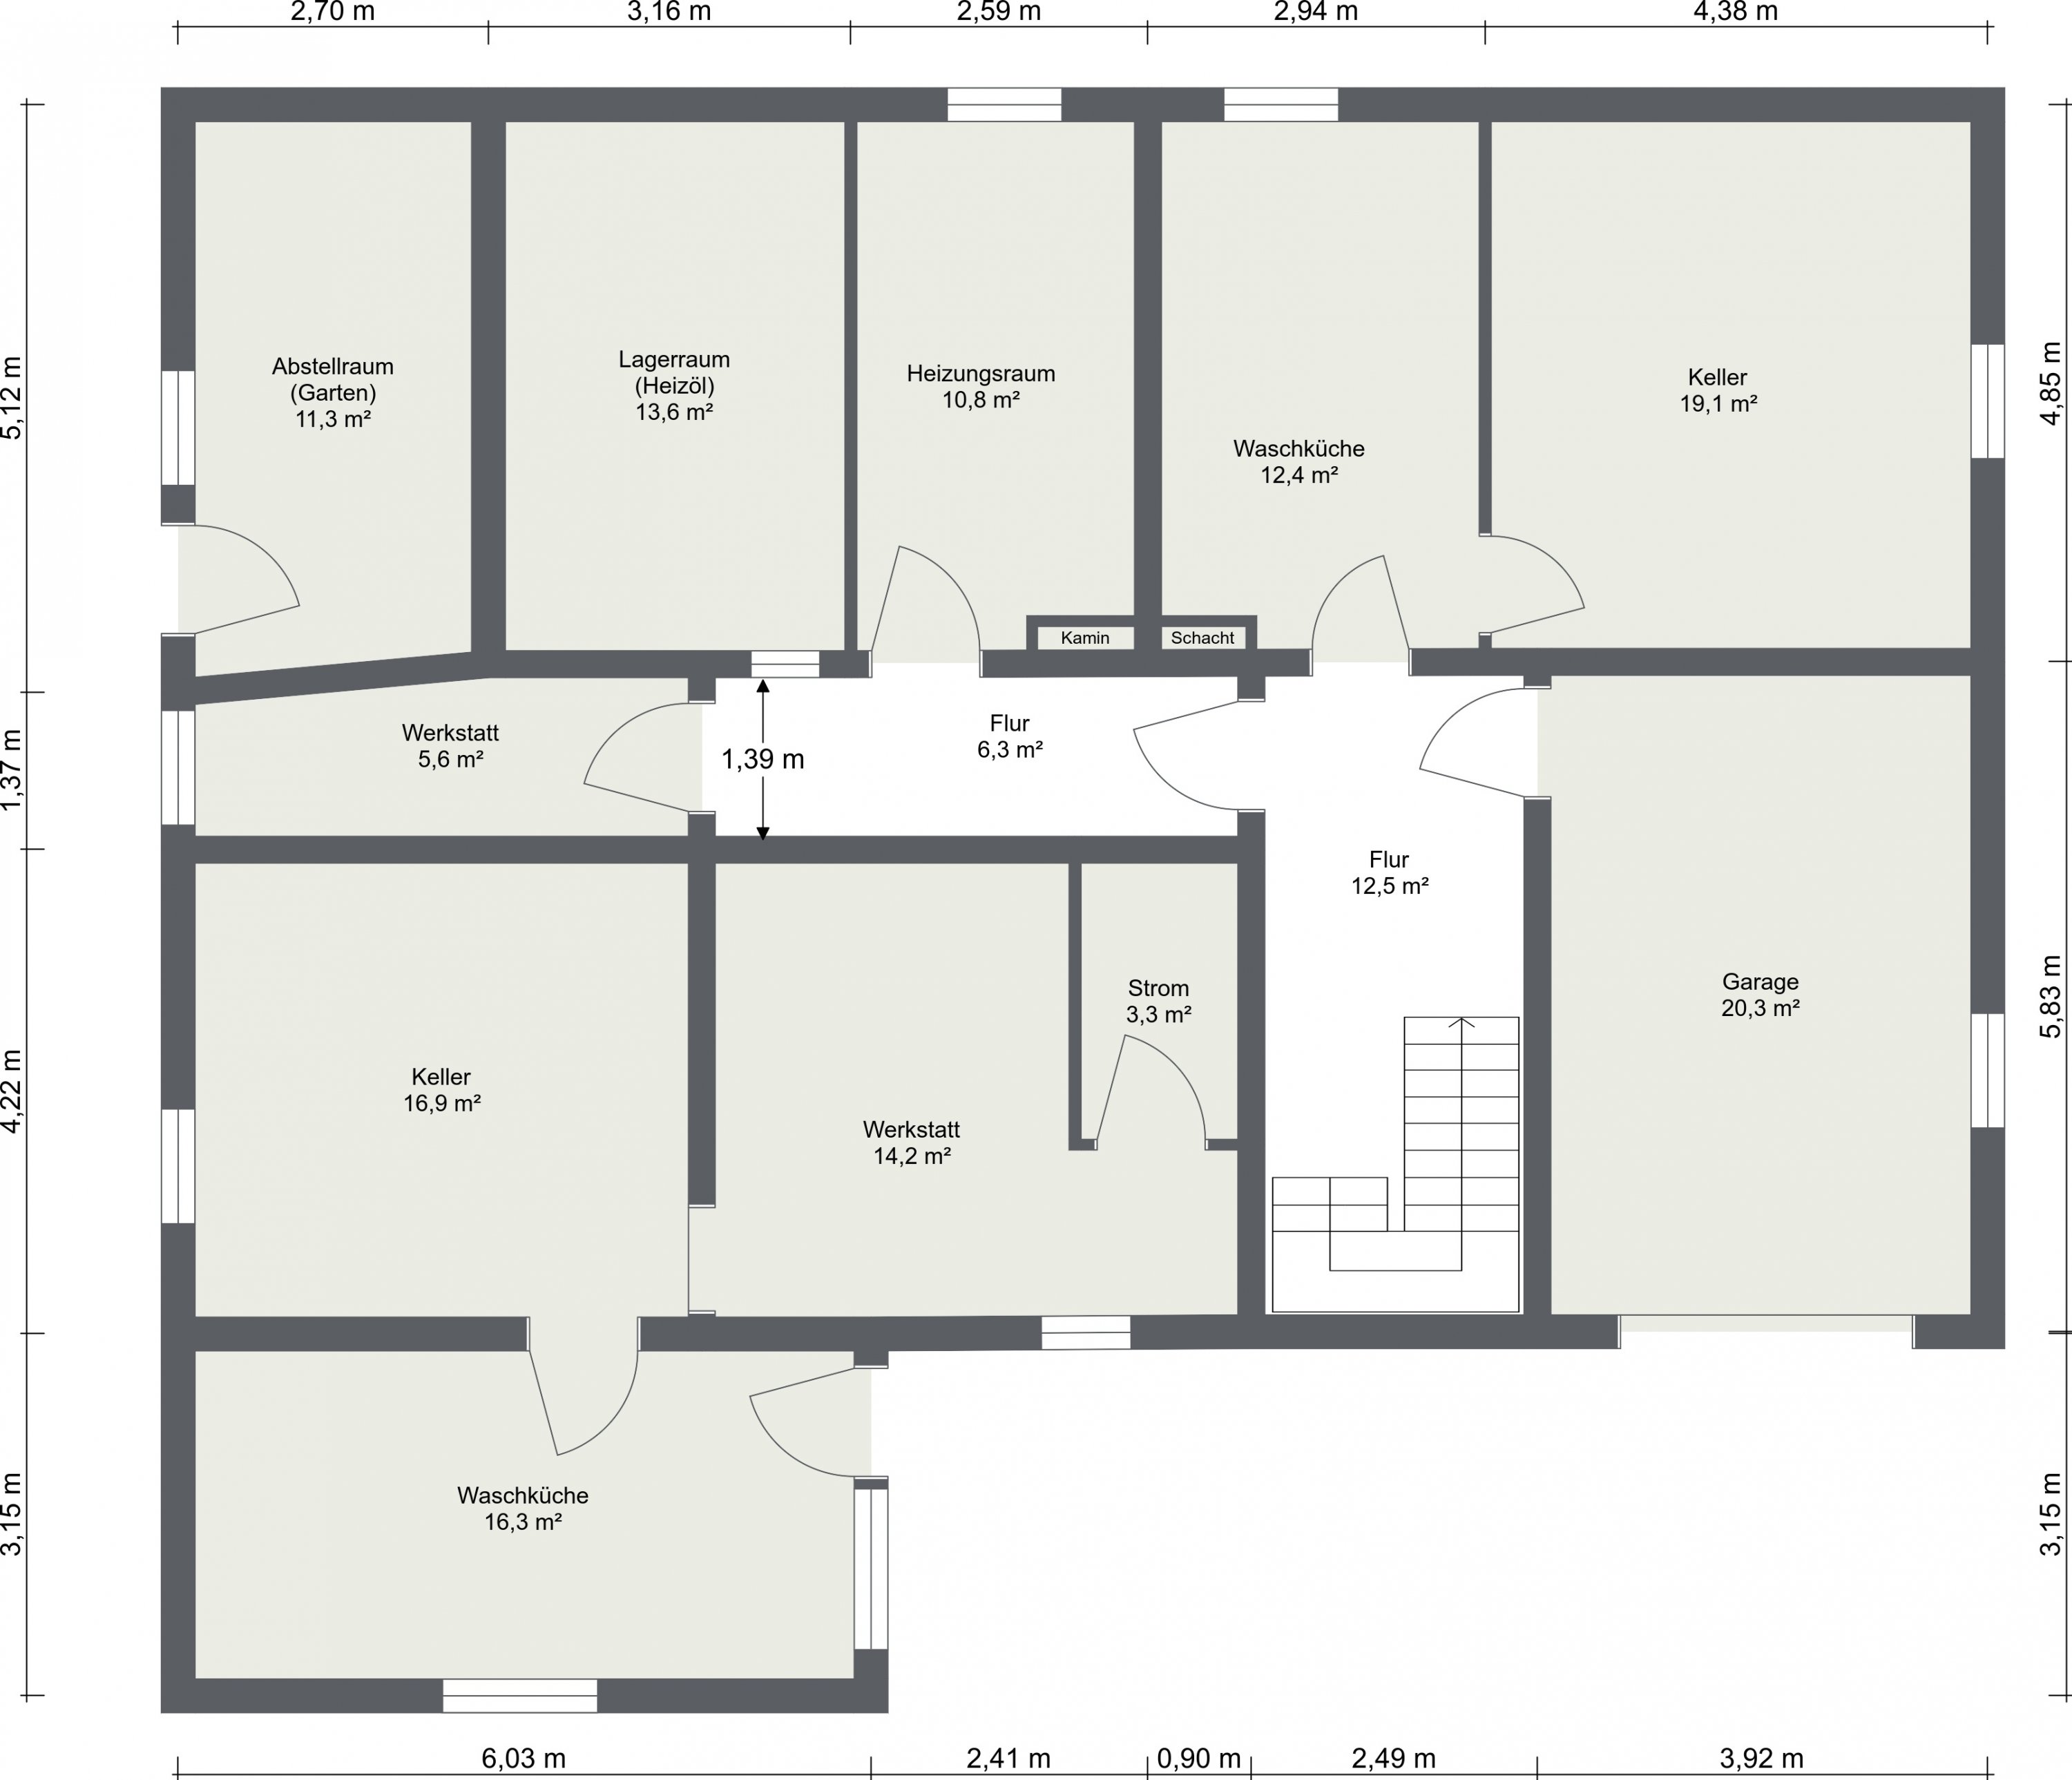 altbausanierung-1966-zweifamilienhaus-skizze-grundriss-273161-1.jpeg